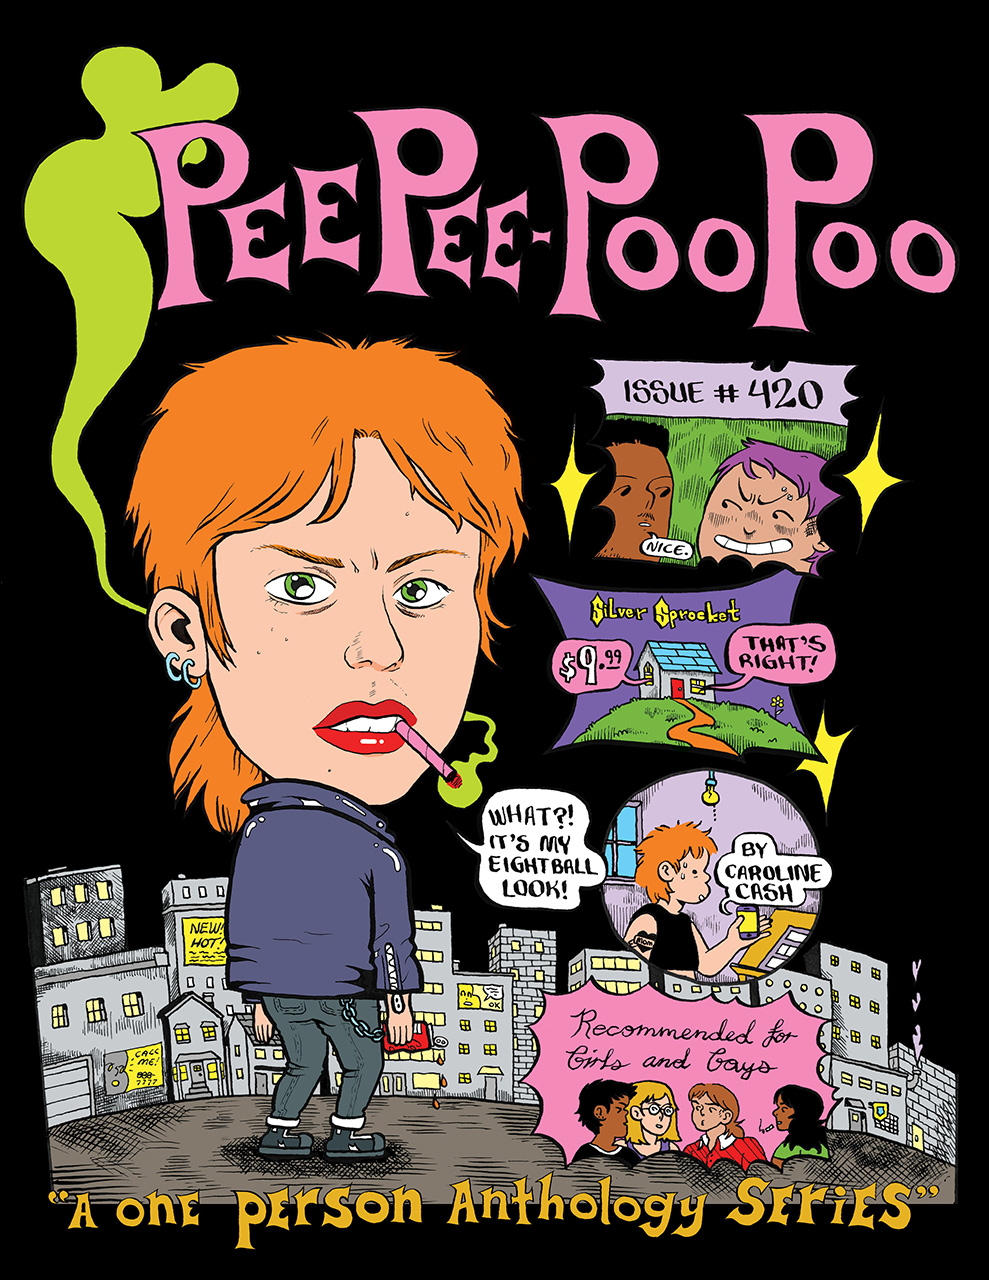 Cover of PeePee PooPoo #420 by Caroline Cash.